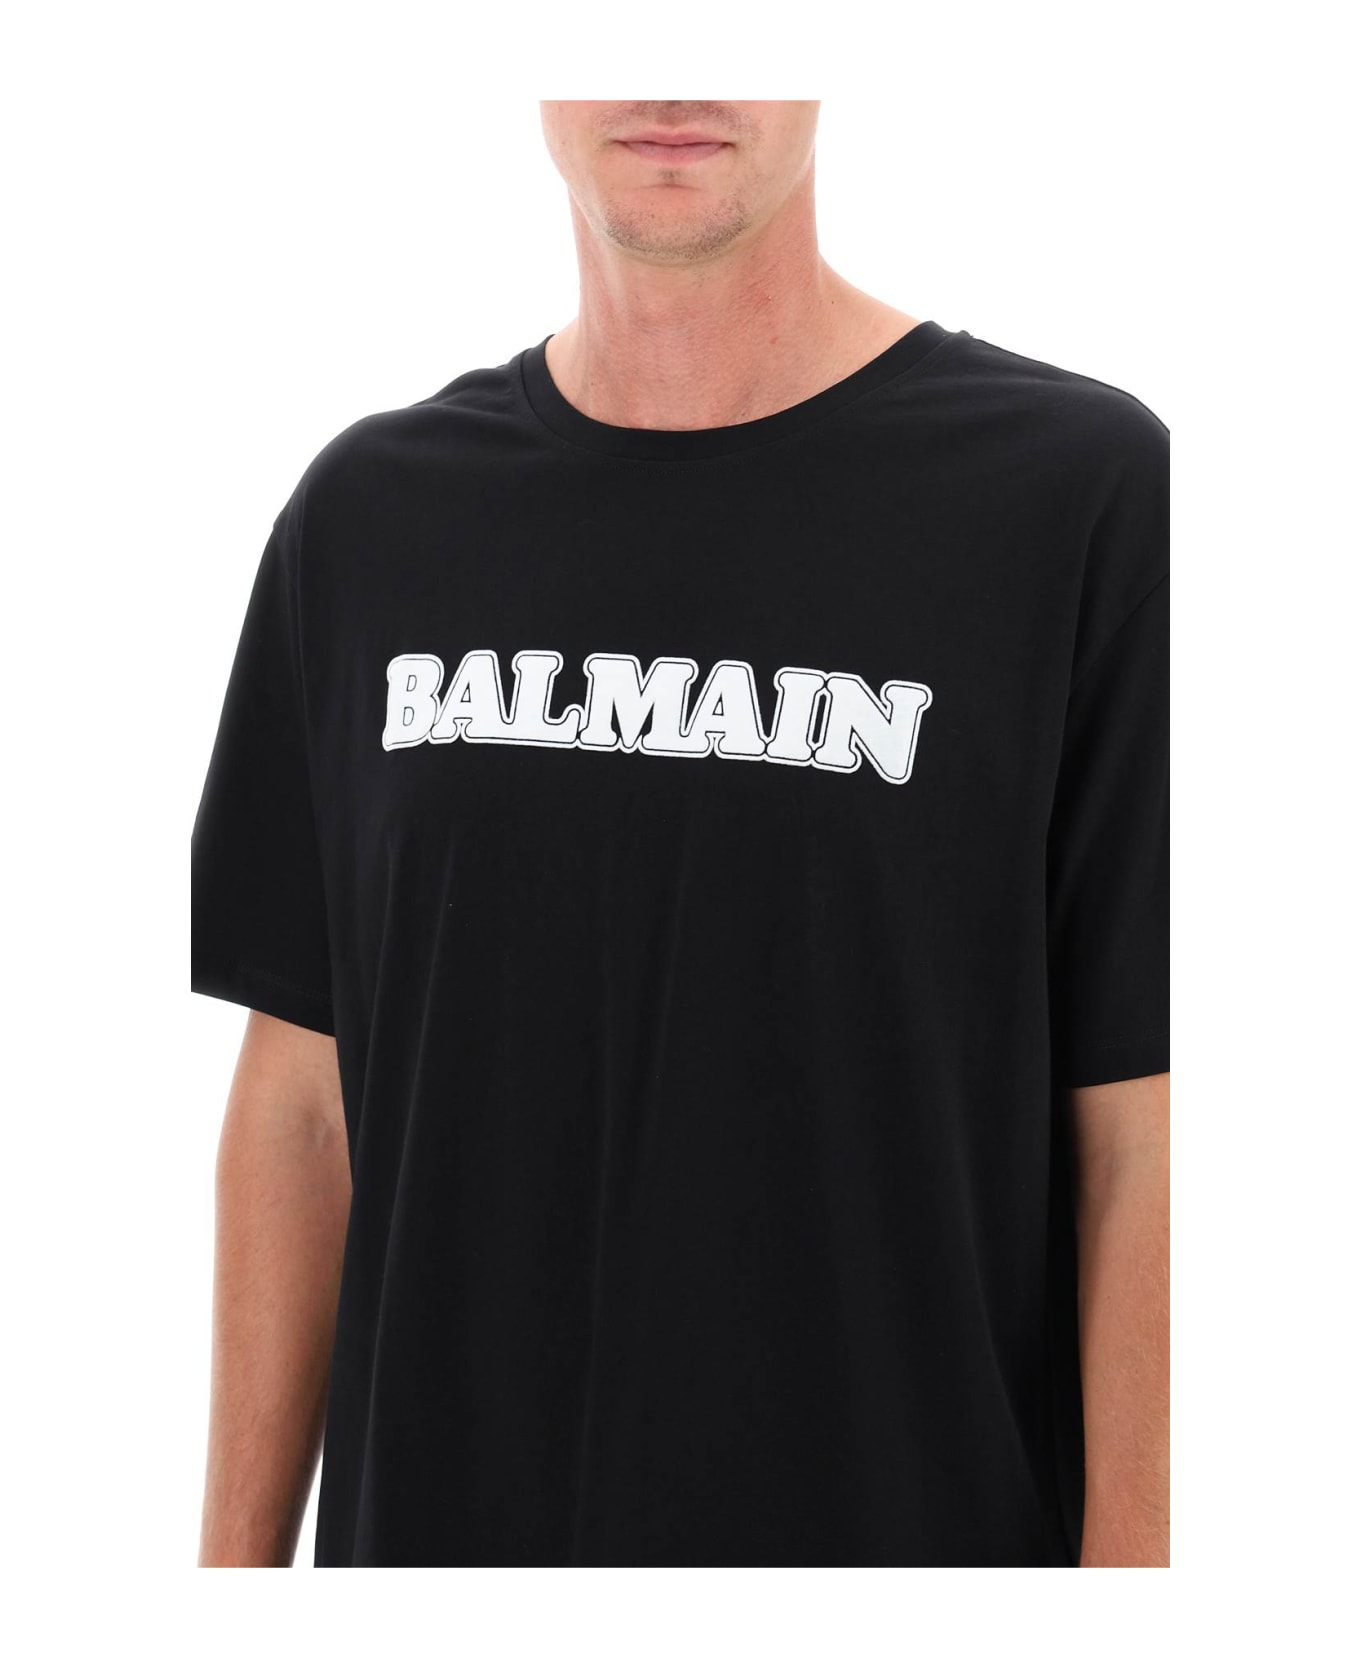 Balmain Retro Flock T-shirt - NOIR BLANC (Black)